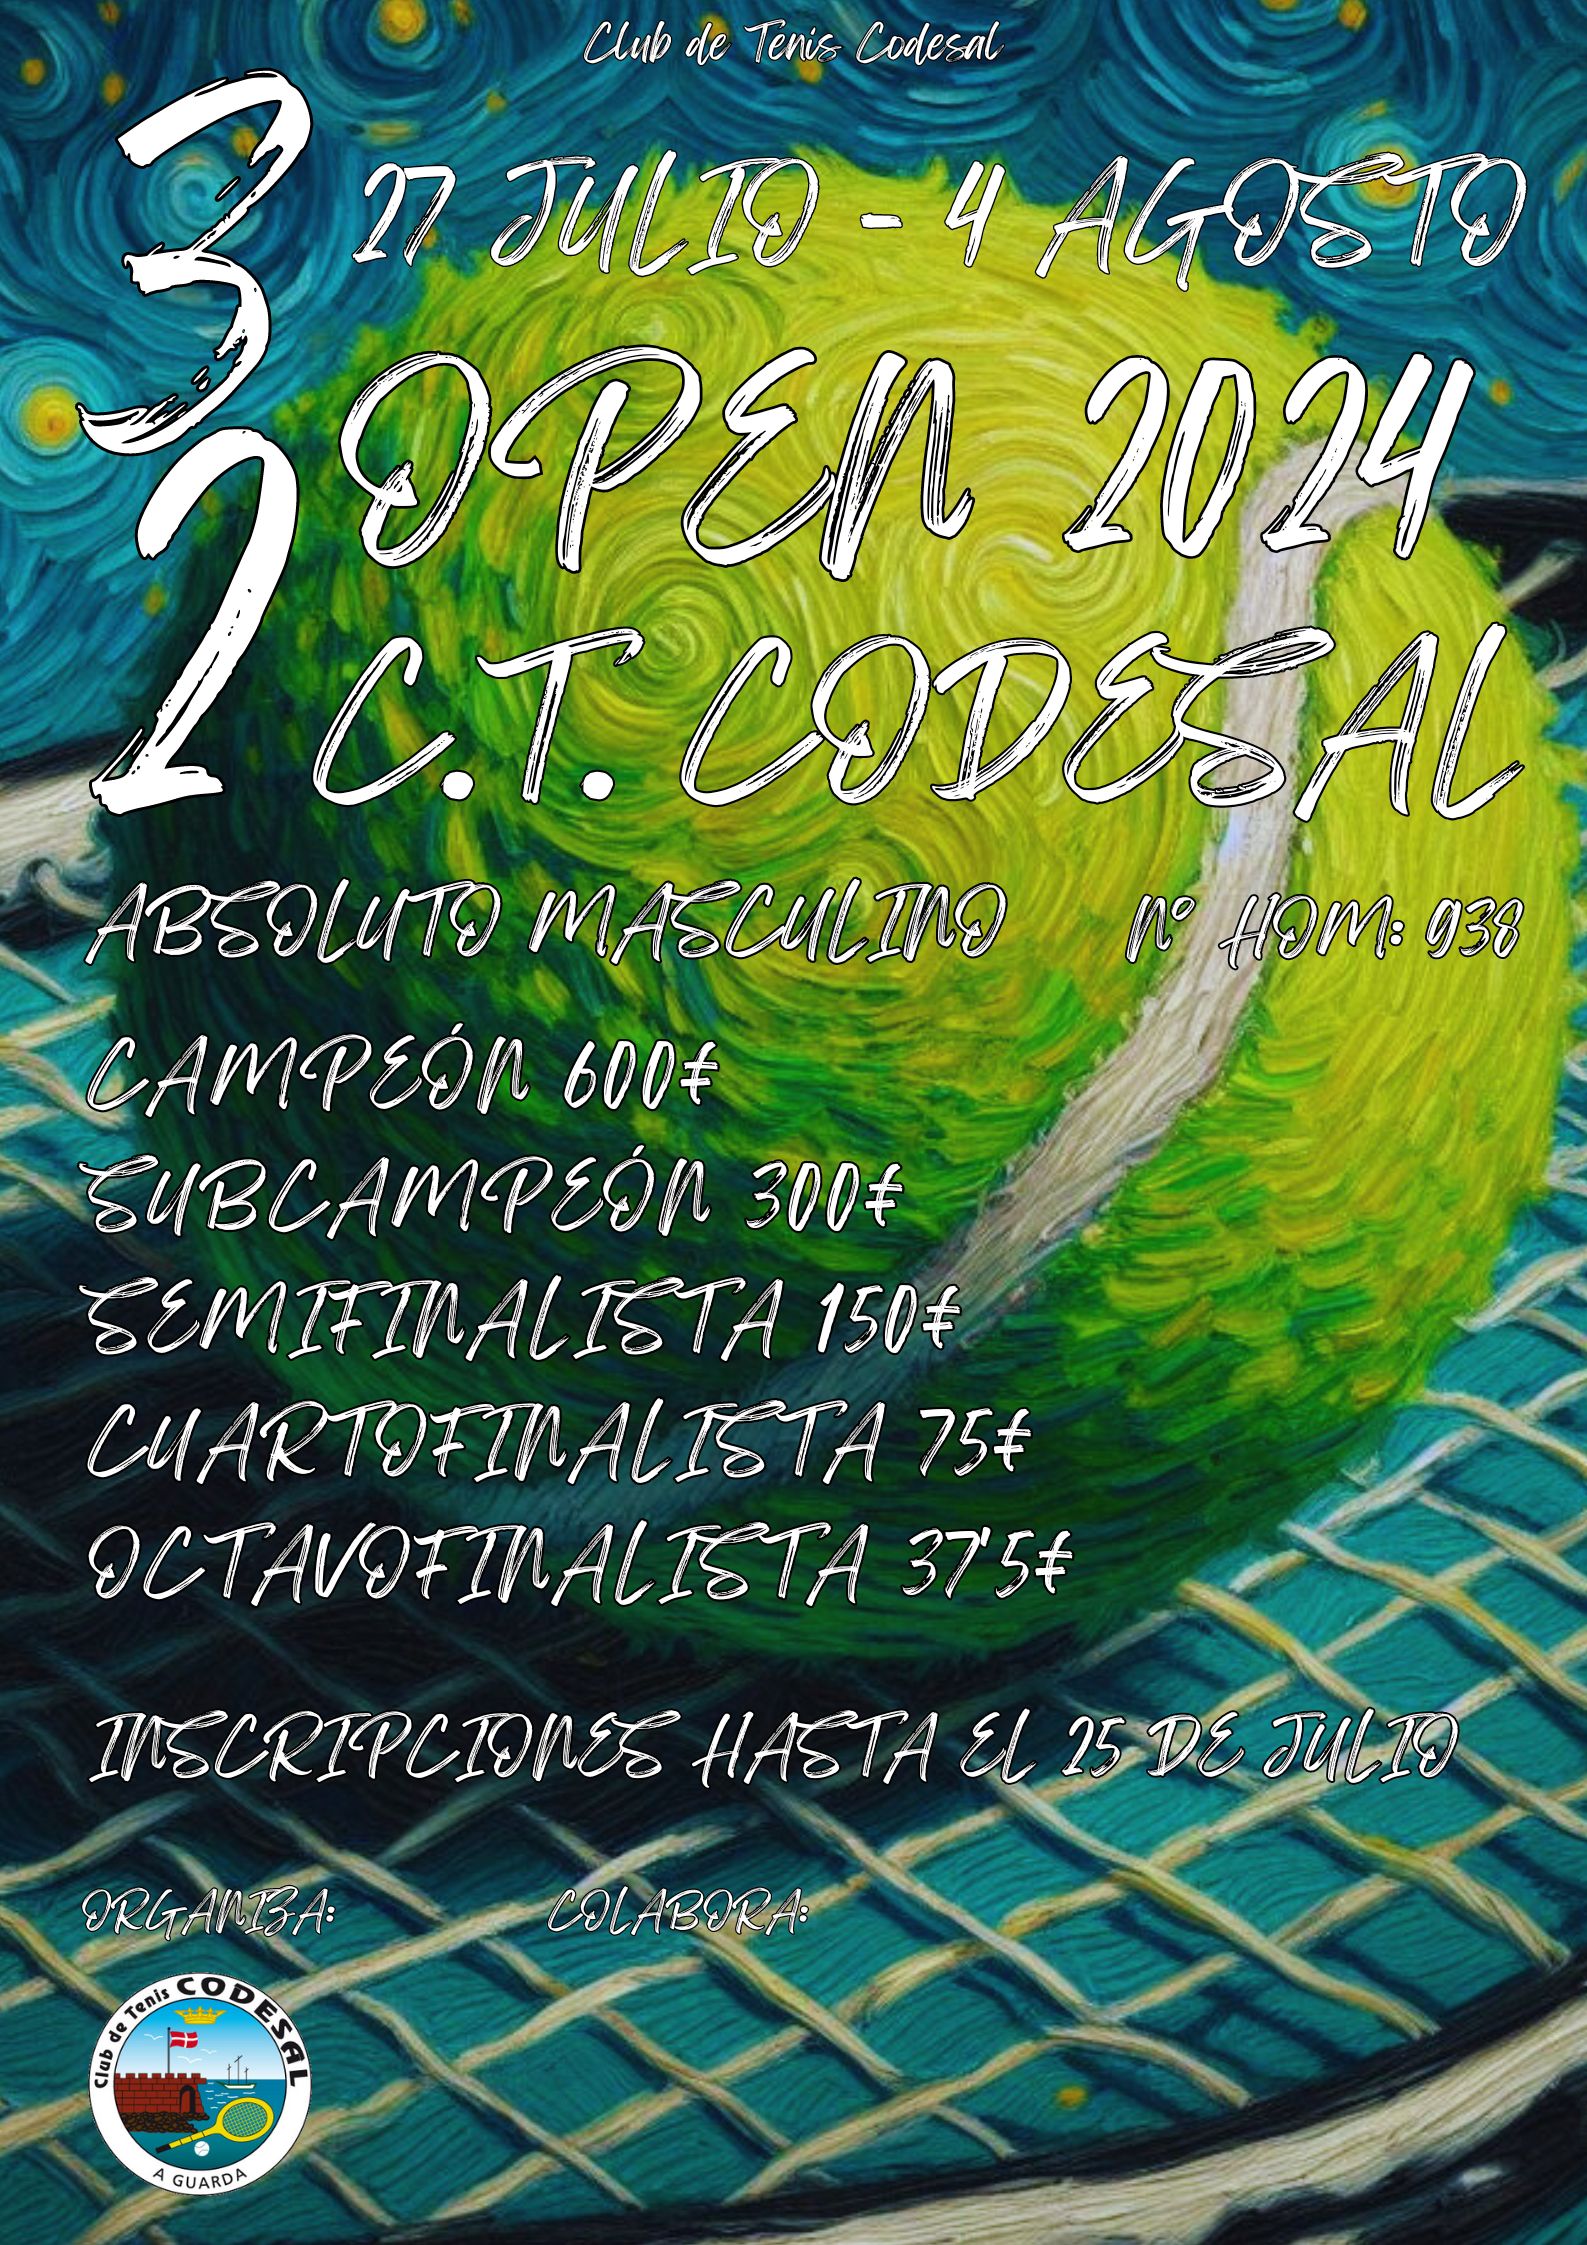 cartel XXXII Open de Tenis Codesal (1800€ en Premios)